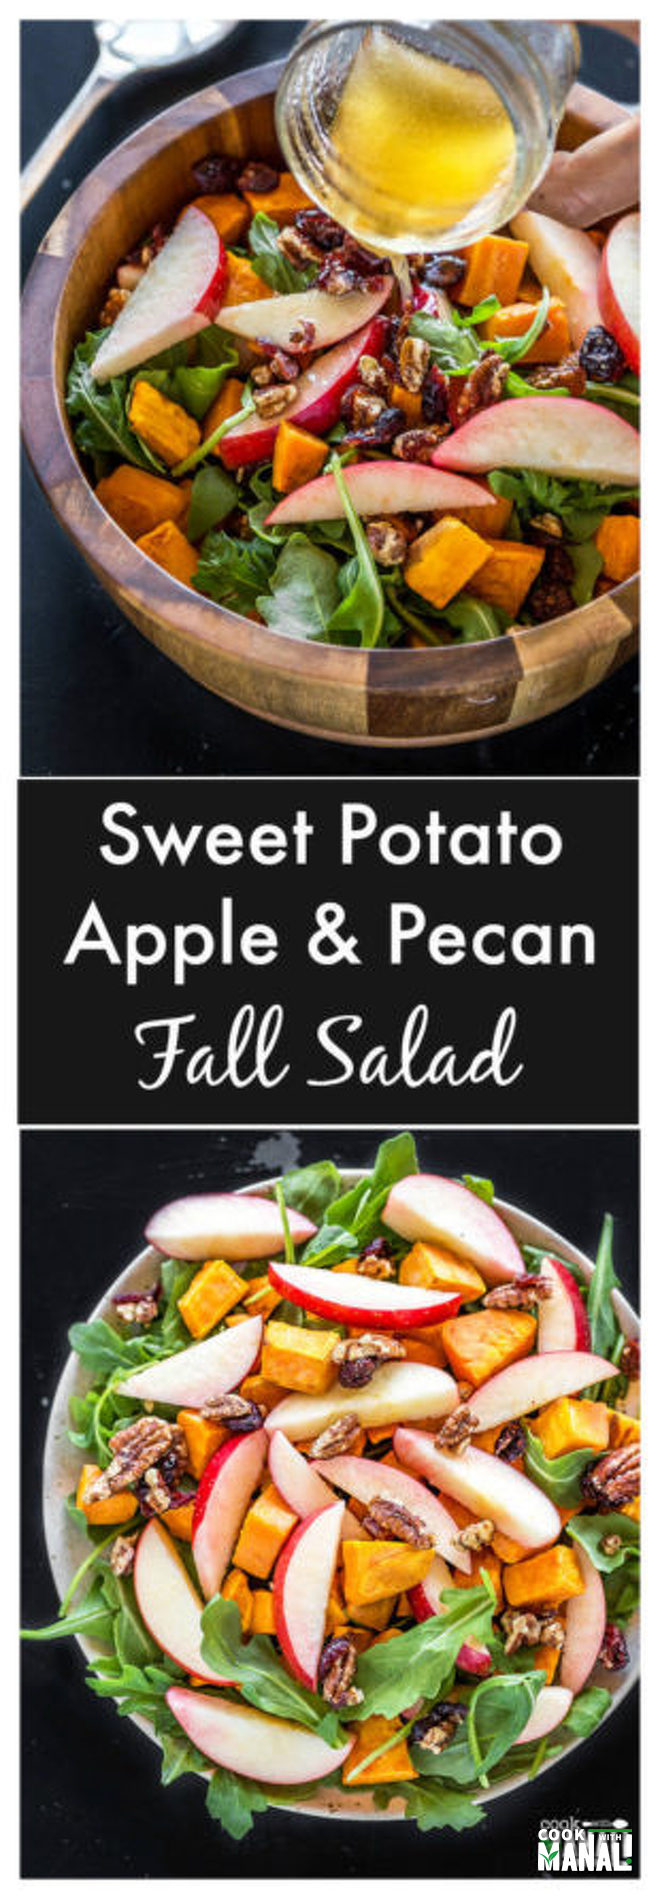 Roasted Sweet Potato Apple & Pecan Salad - Cook With Manali